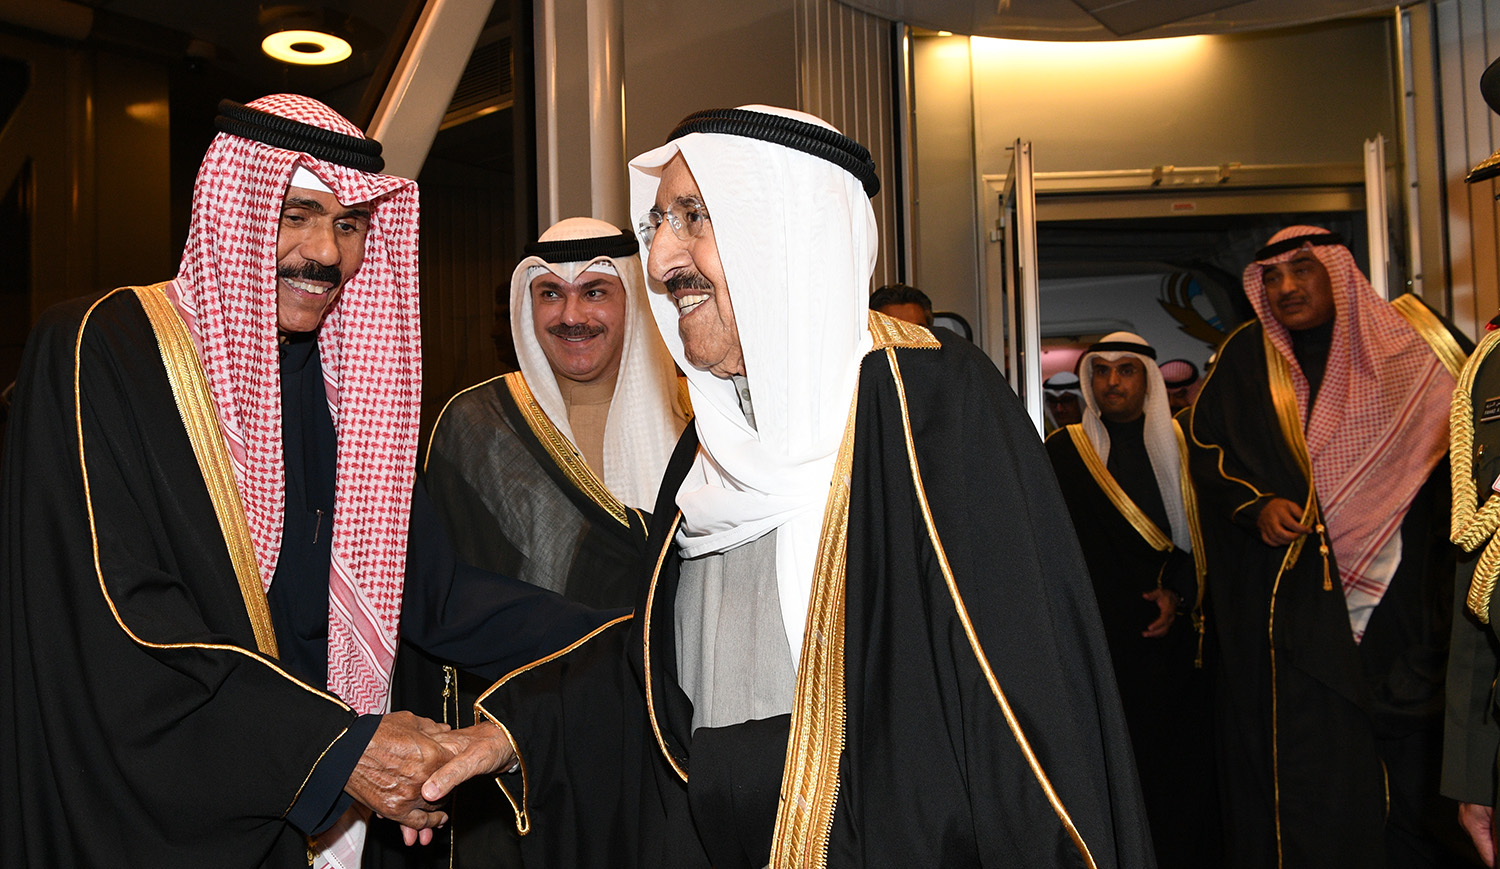 His Highness the Amir Sheikh Sabah Al-Ahmad Al-Jaber Al-Sabah returns home after participating in Riyadh's GCC summit